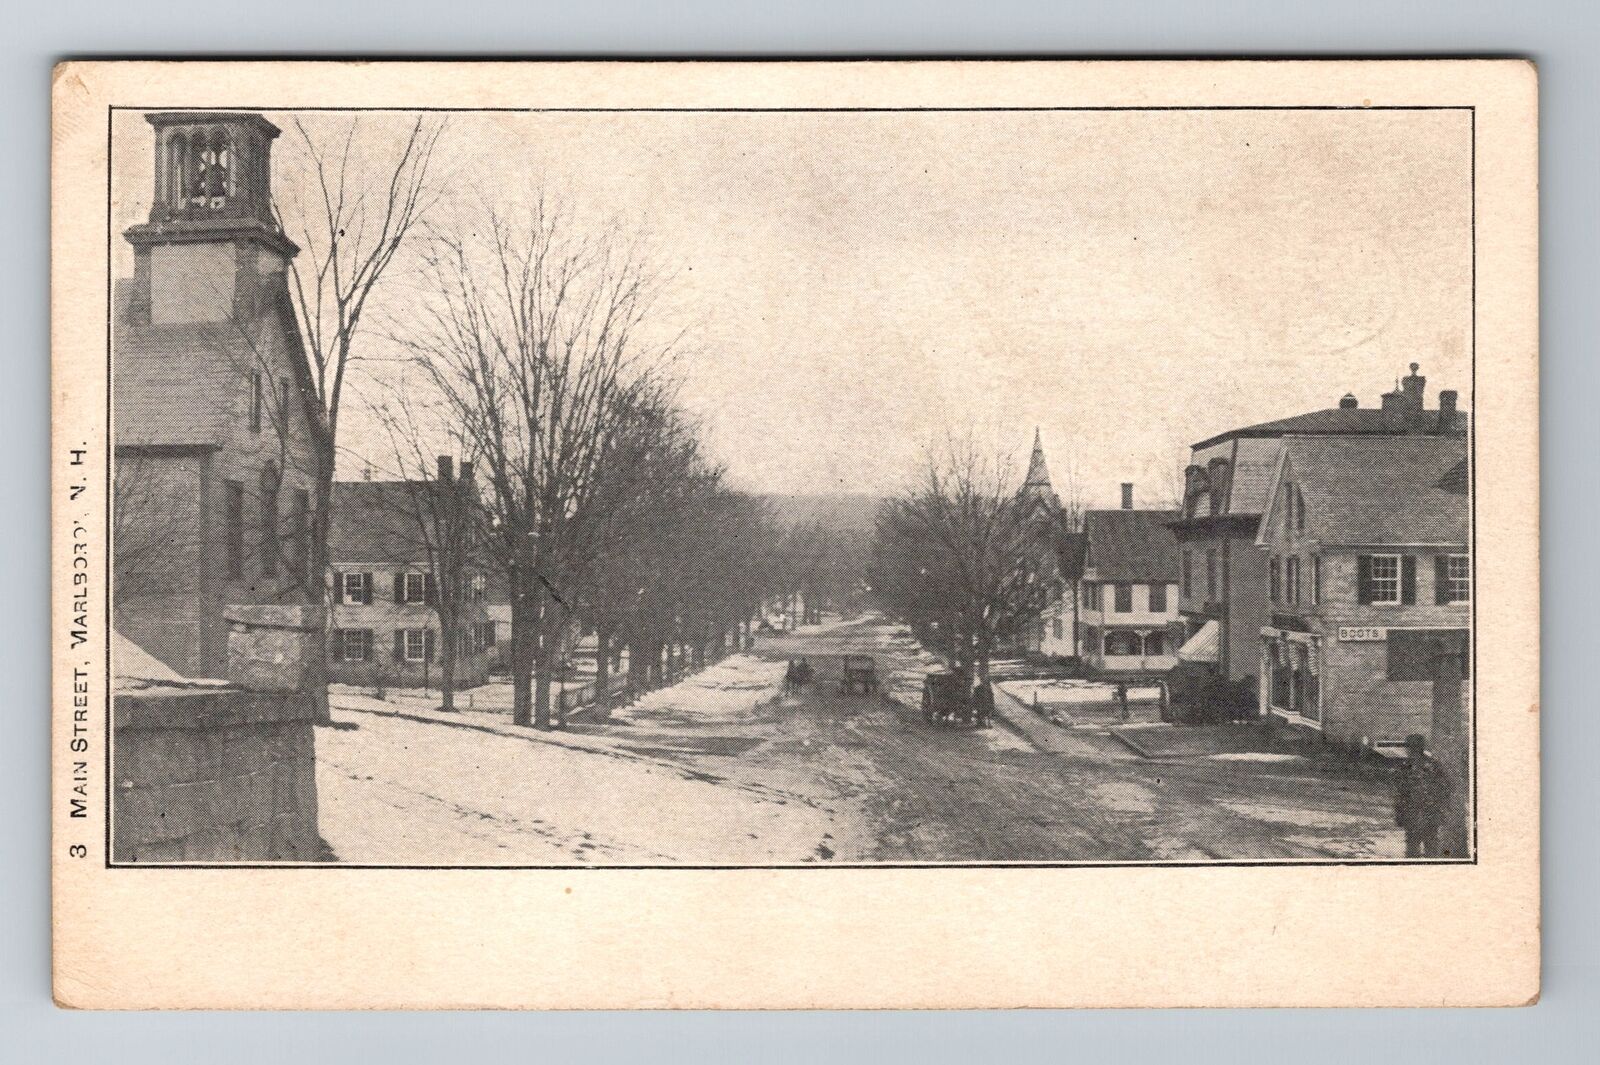 Marlboro NH-New Hampshire, Main Street, Antique, Vintage Postcard